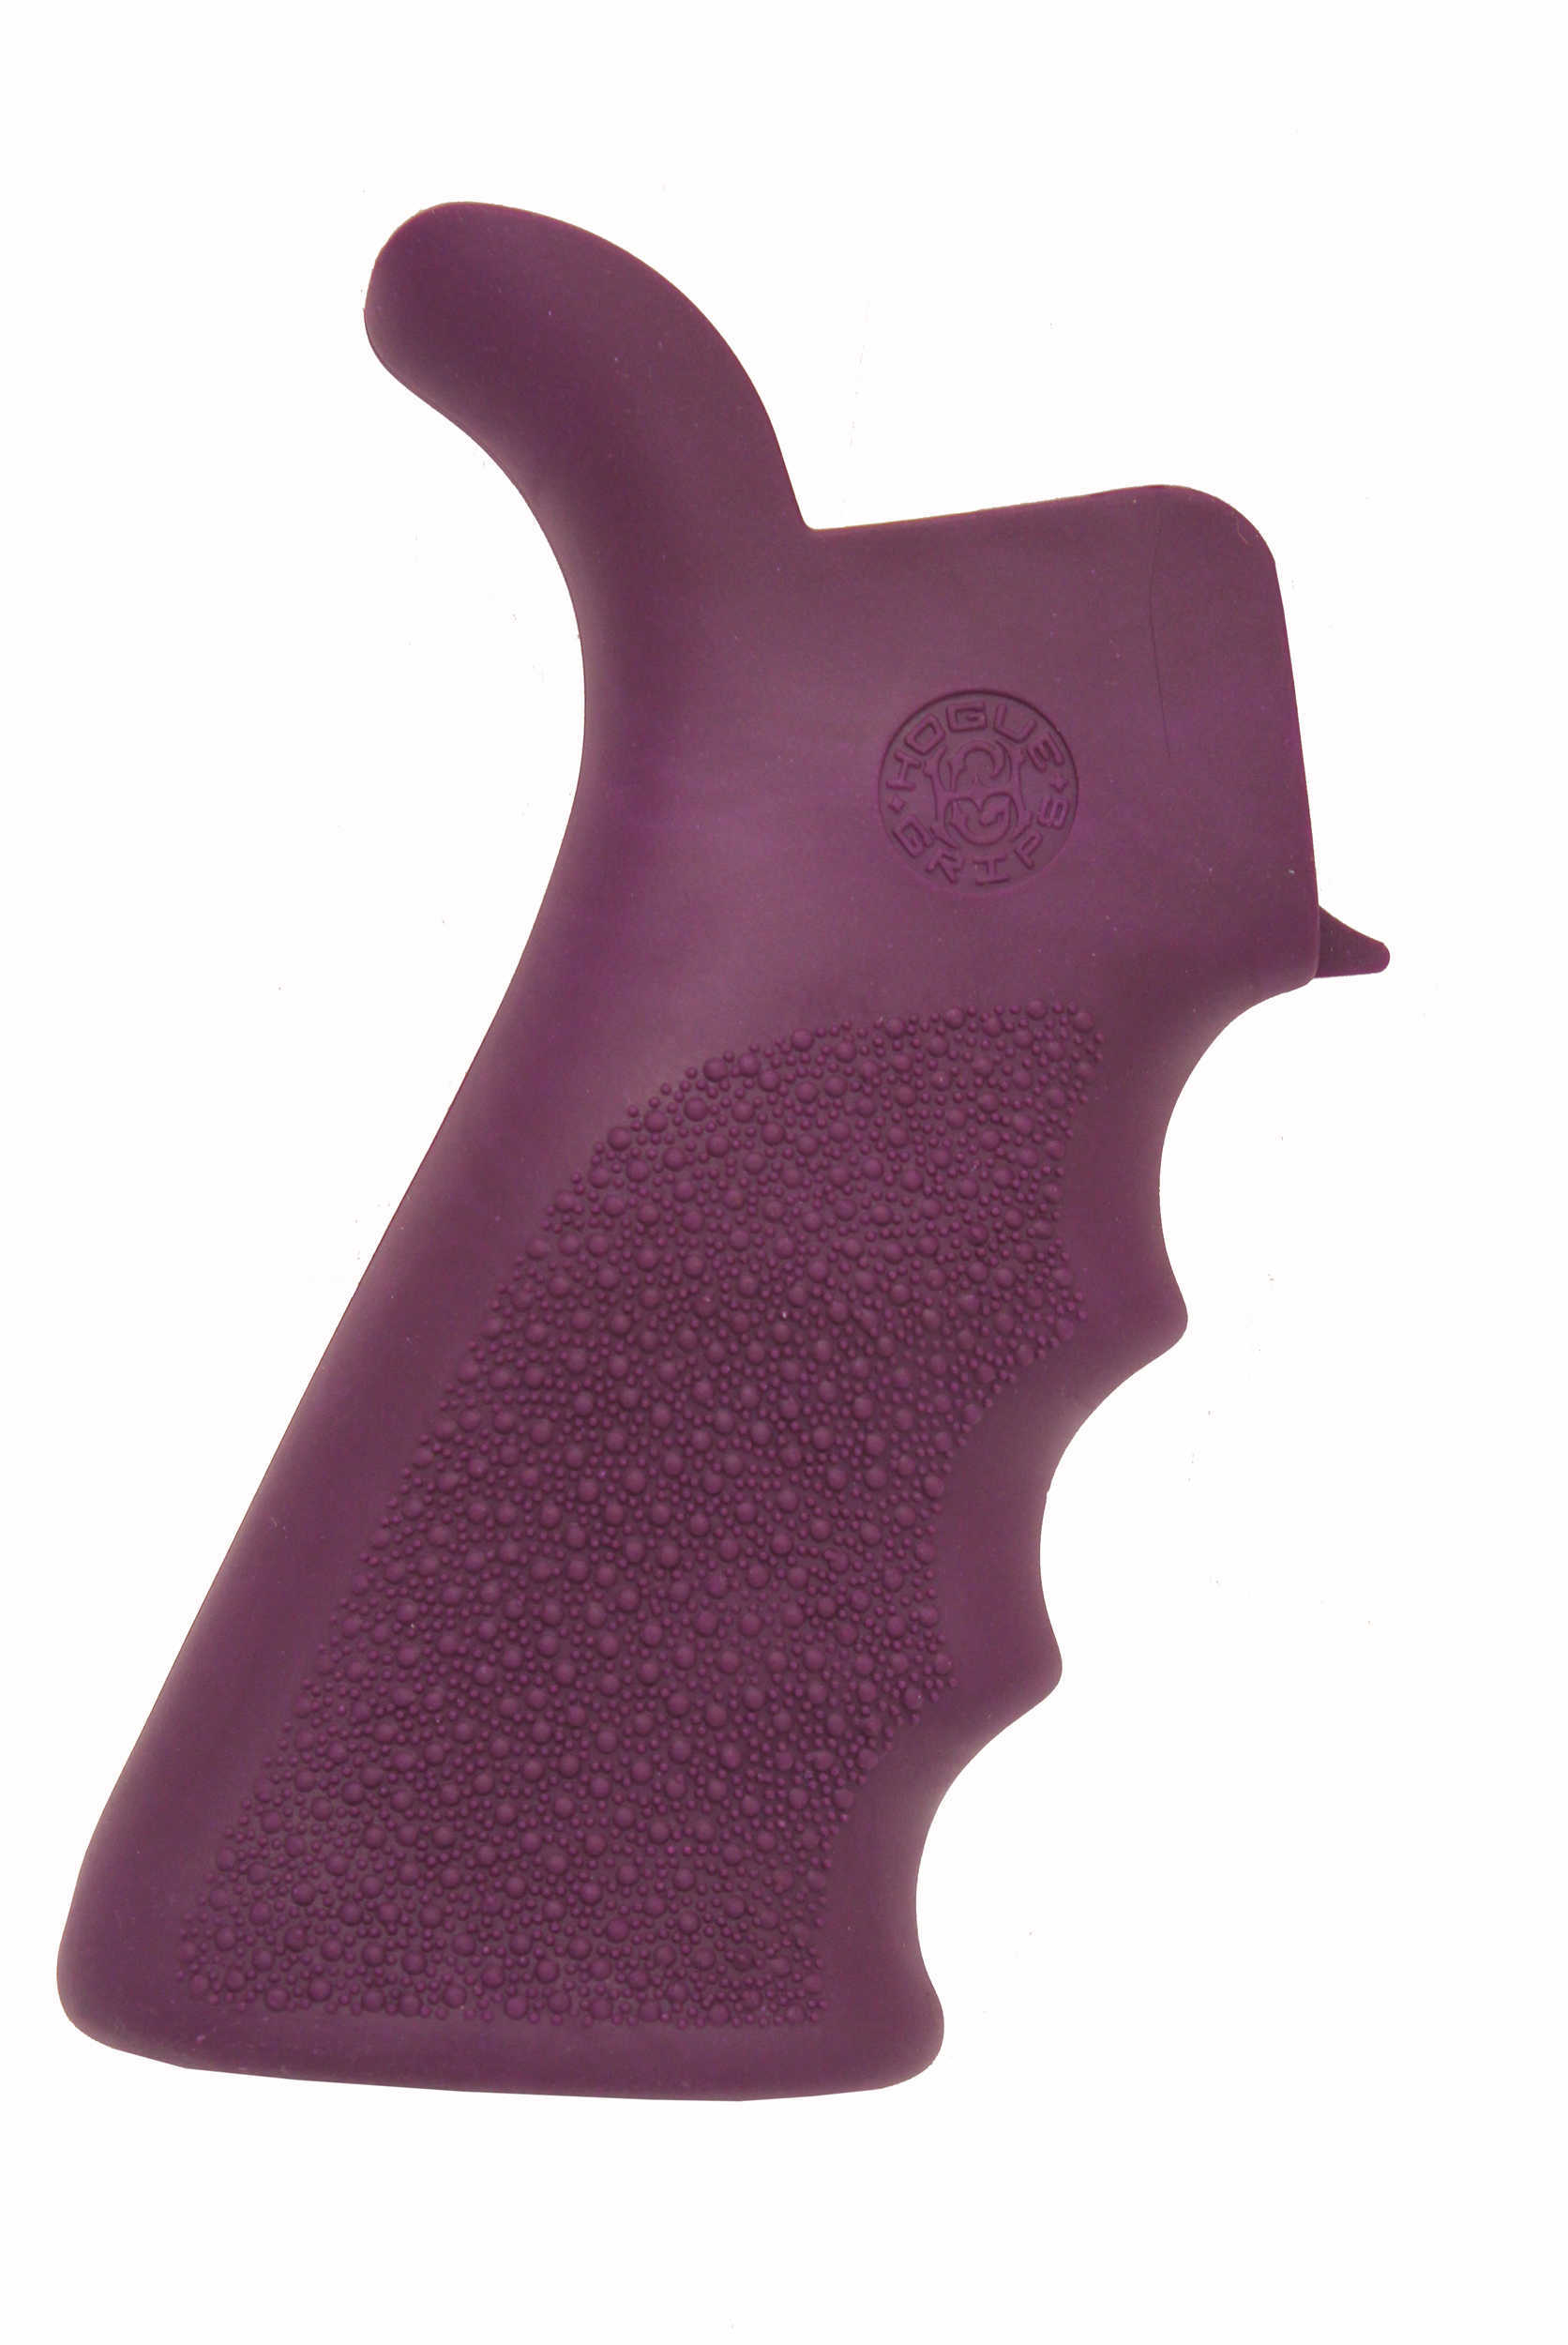 Hogue AR-15 Beavertail Grip W/Finger GROOVES Purple